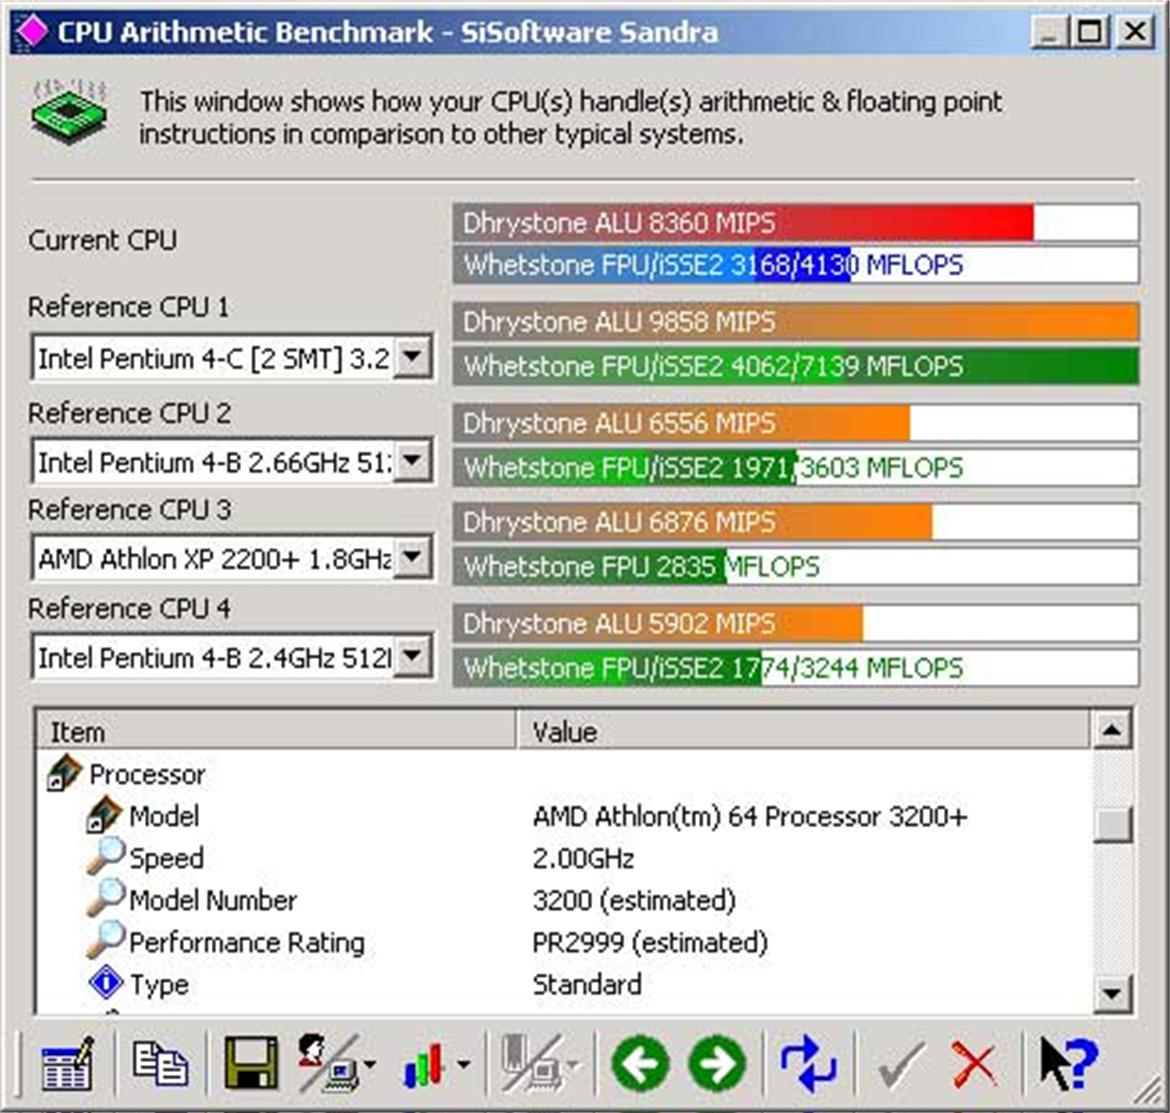 Foxconn 755A01-6EKRS Motherboard